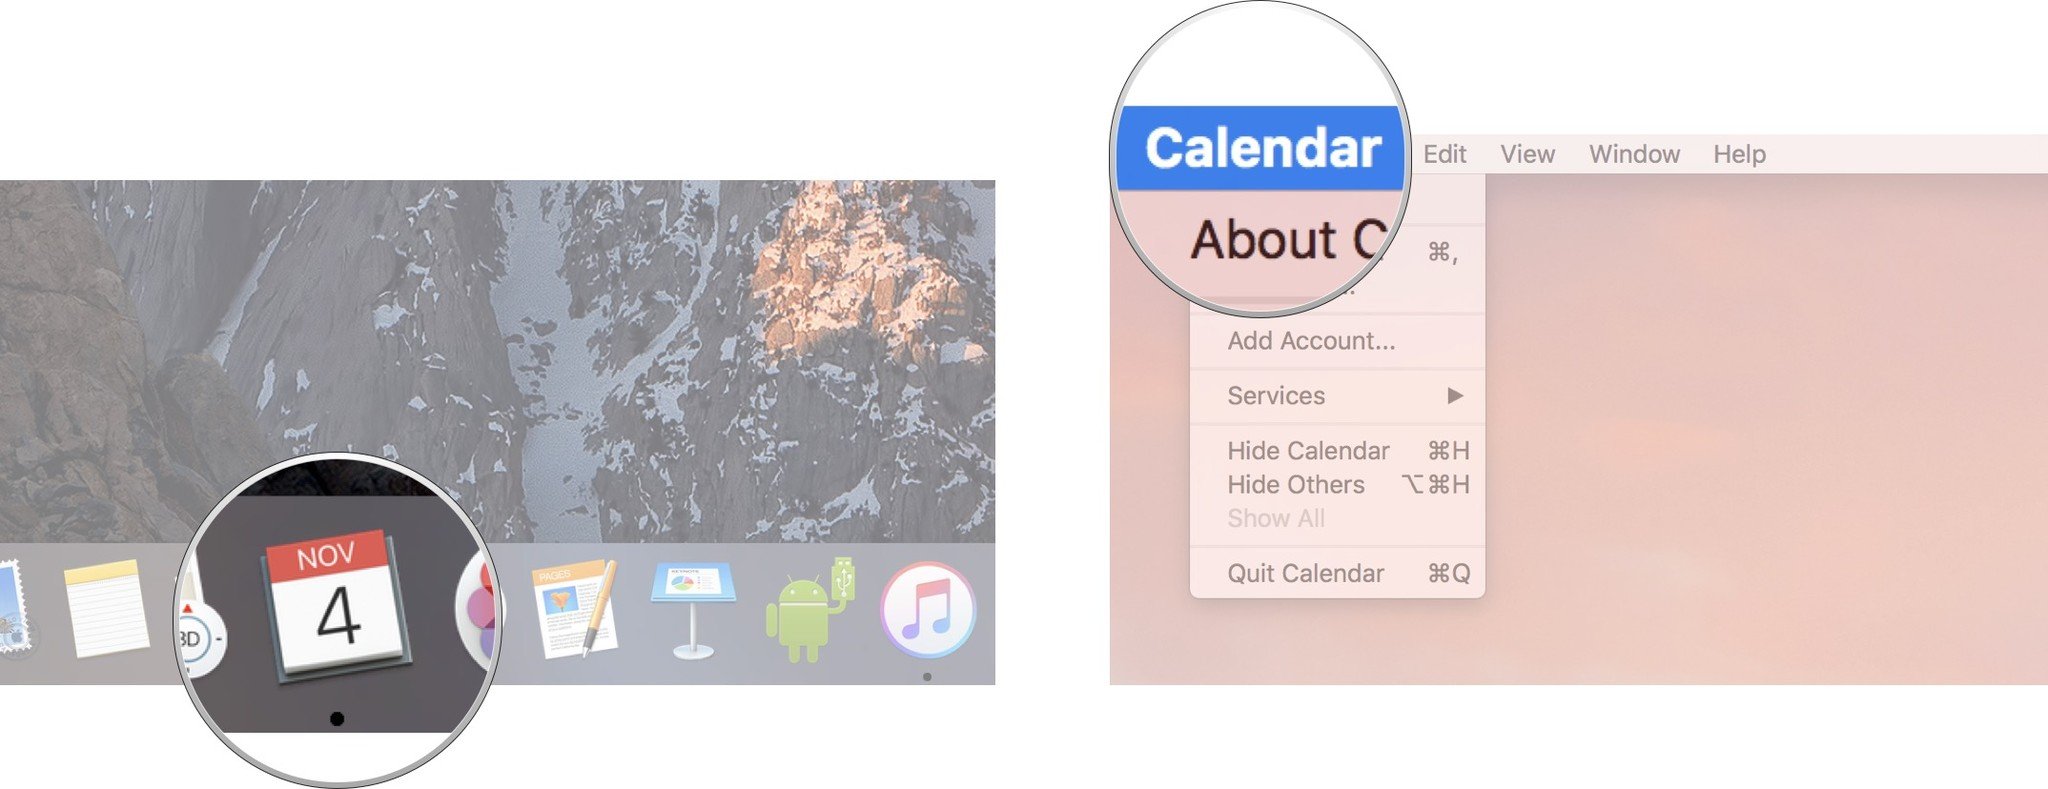 Launc h the Calendar app and then click on Calendar in your top menu bar.